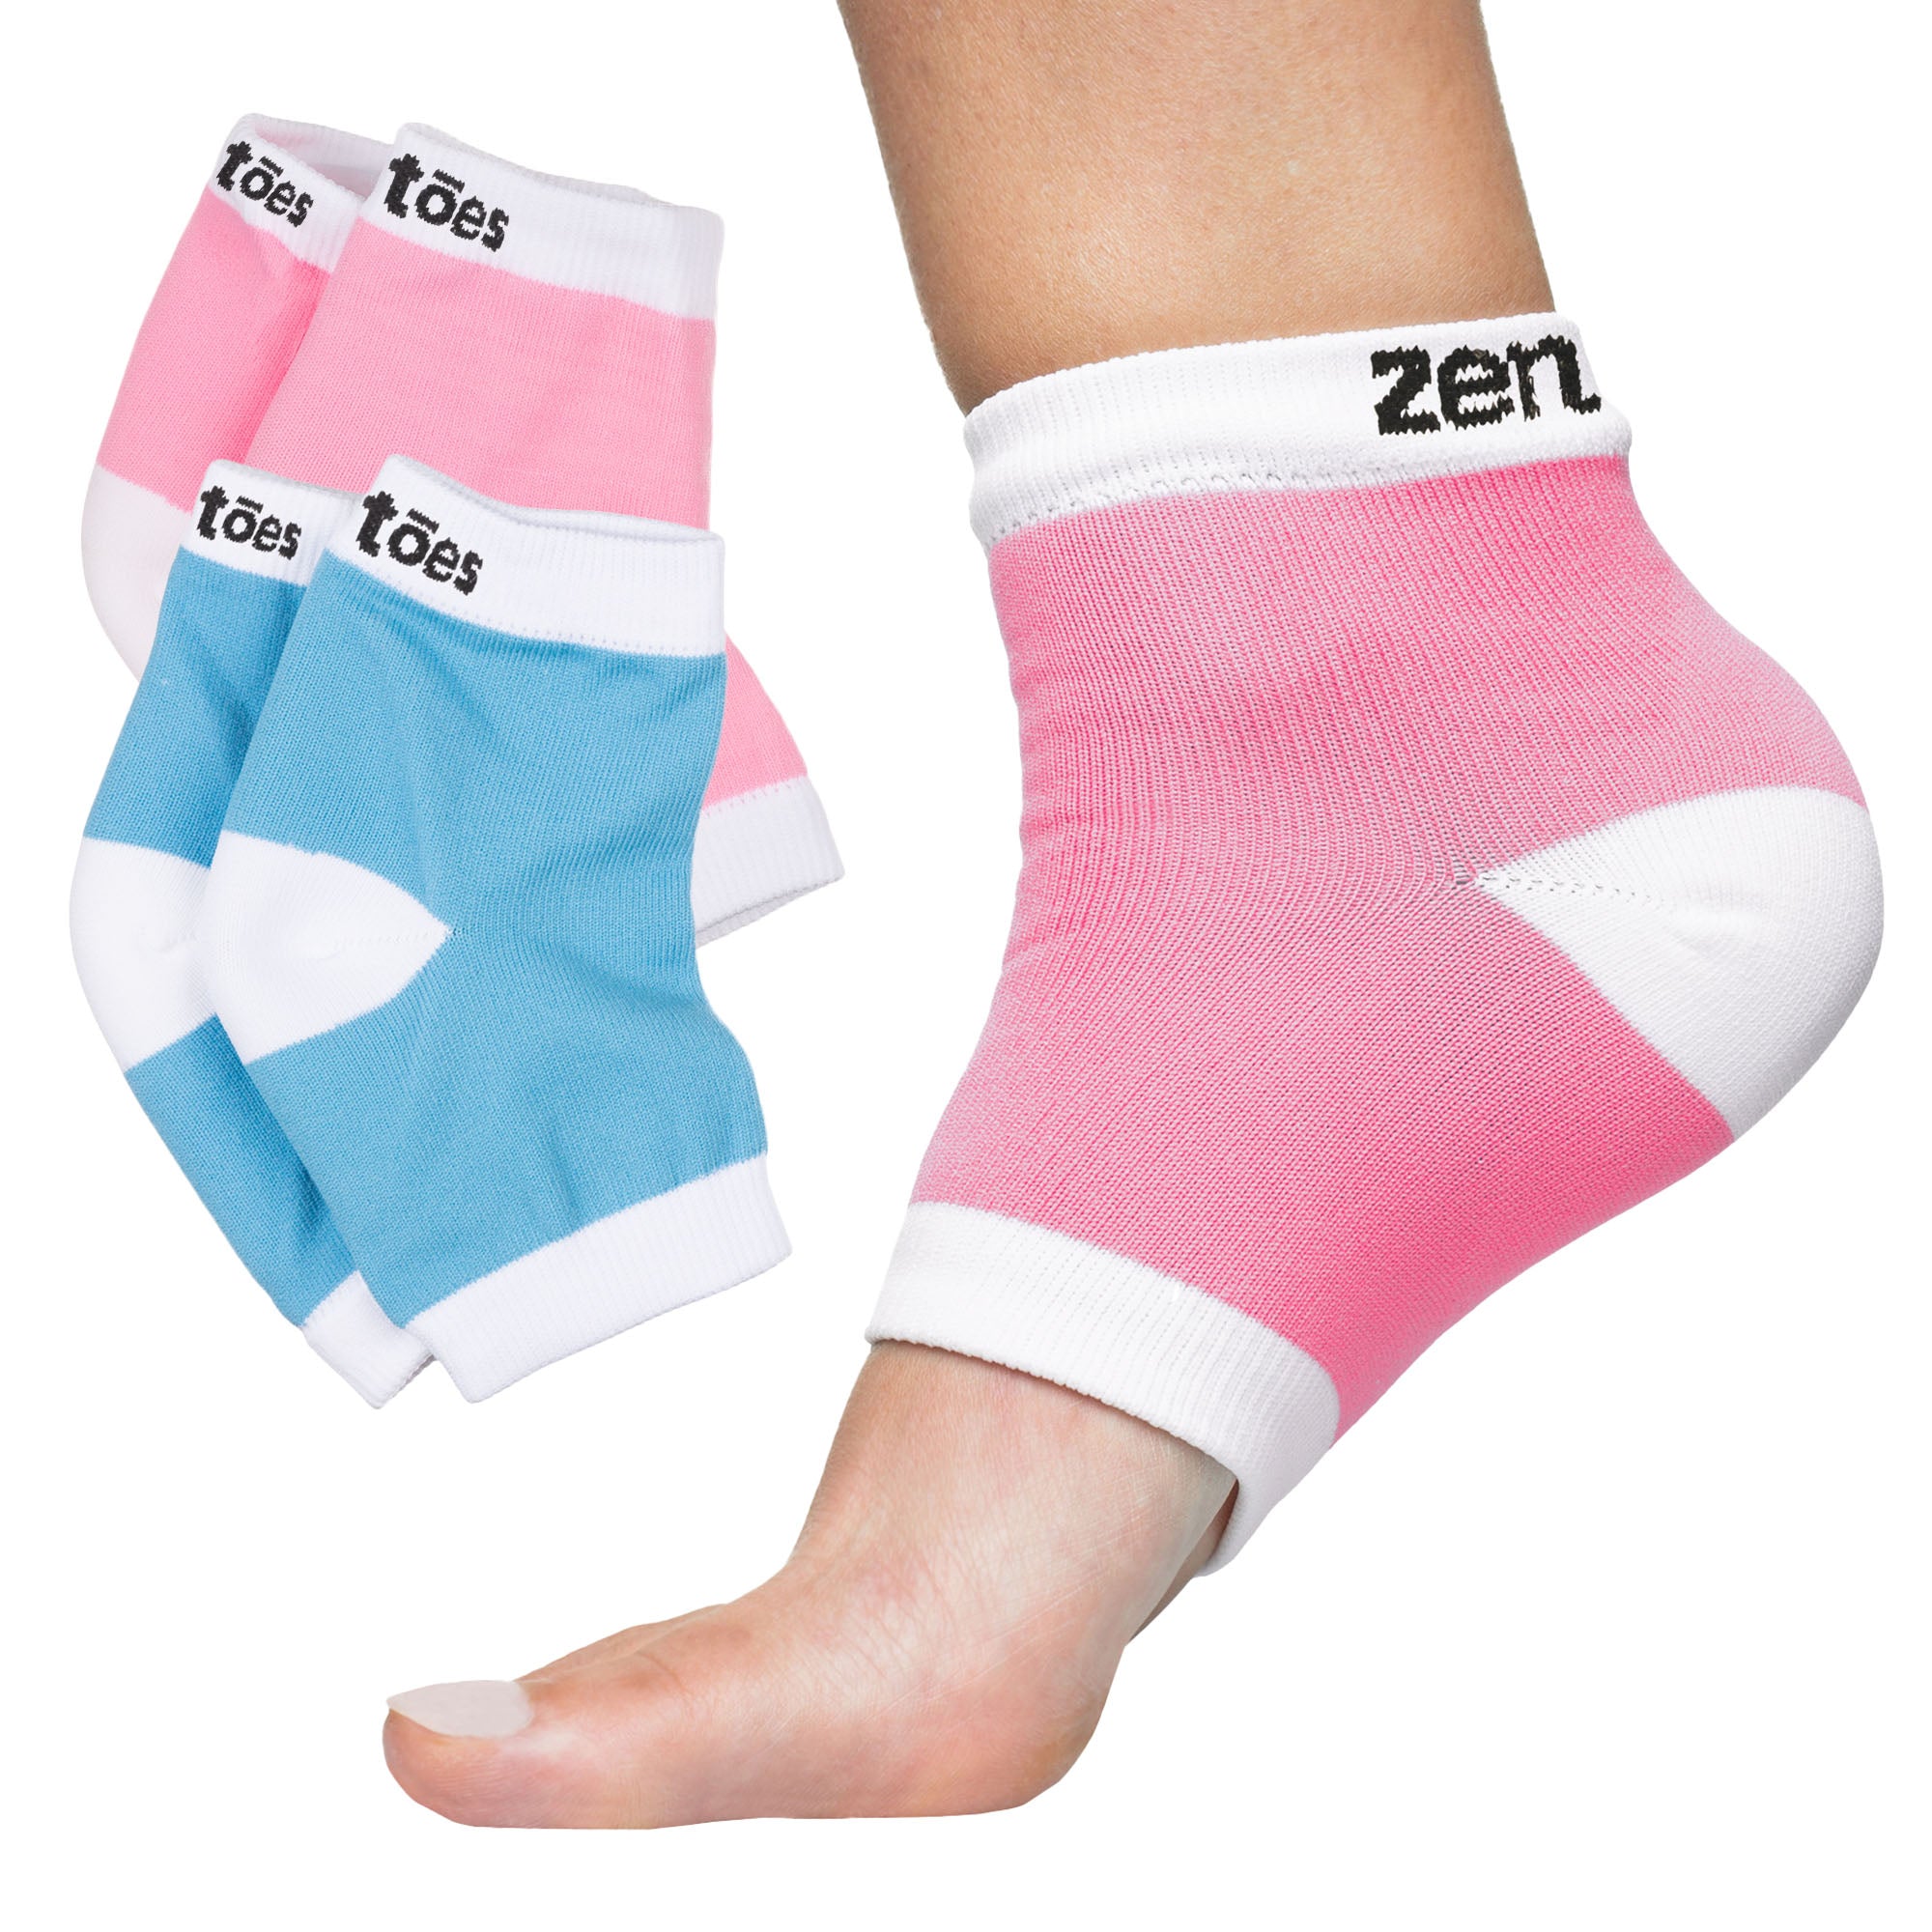 Moisturizing Socks Lotion Gel for Dry Cracked Heels 4 Pack, Spa Gel So –  Nado Care